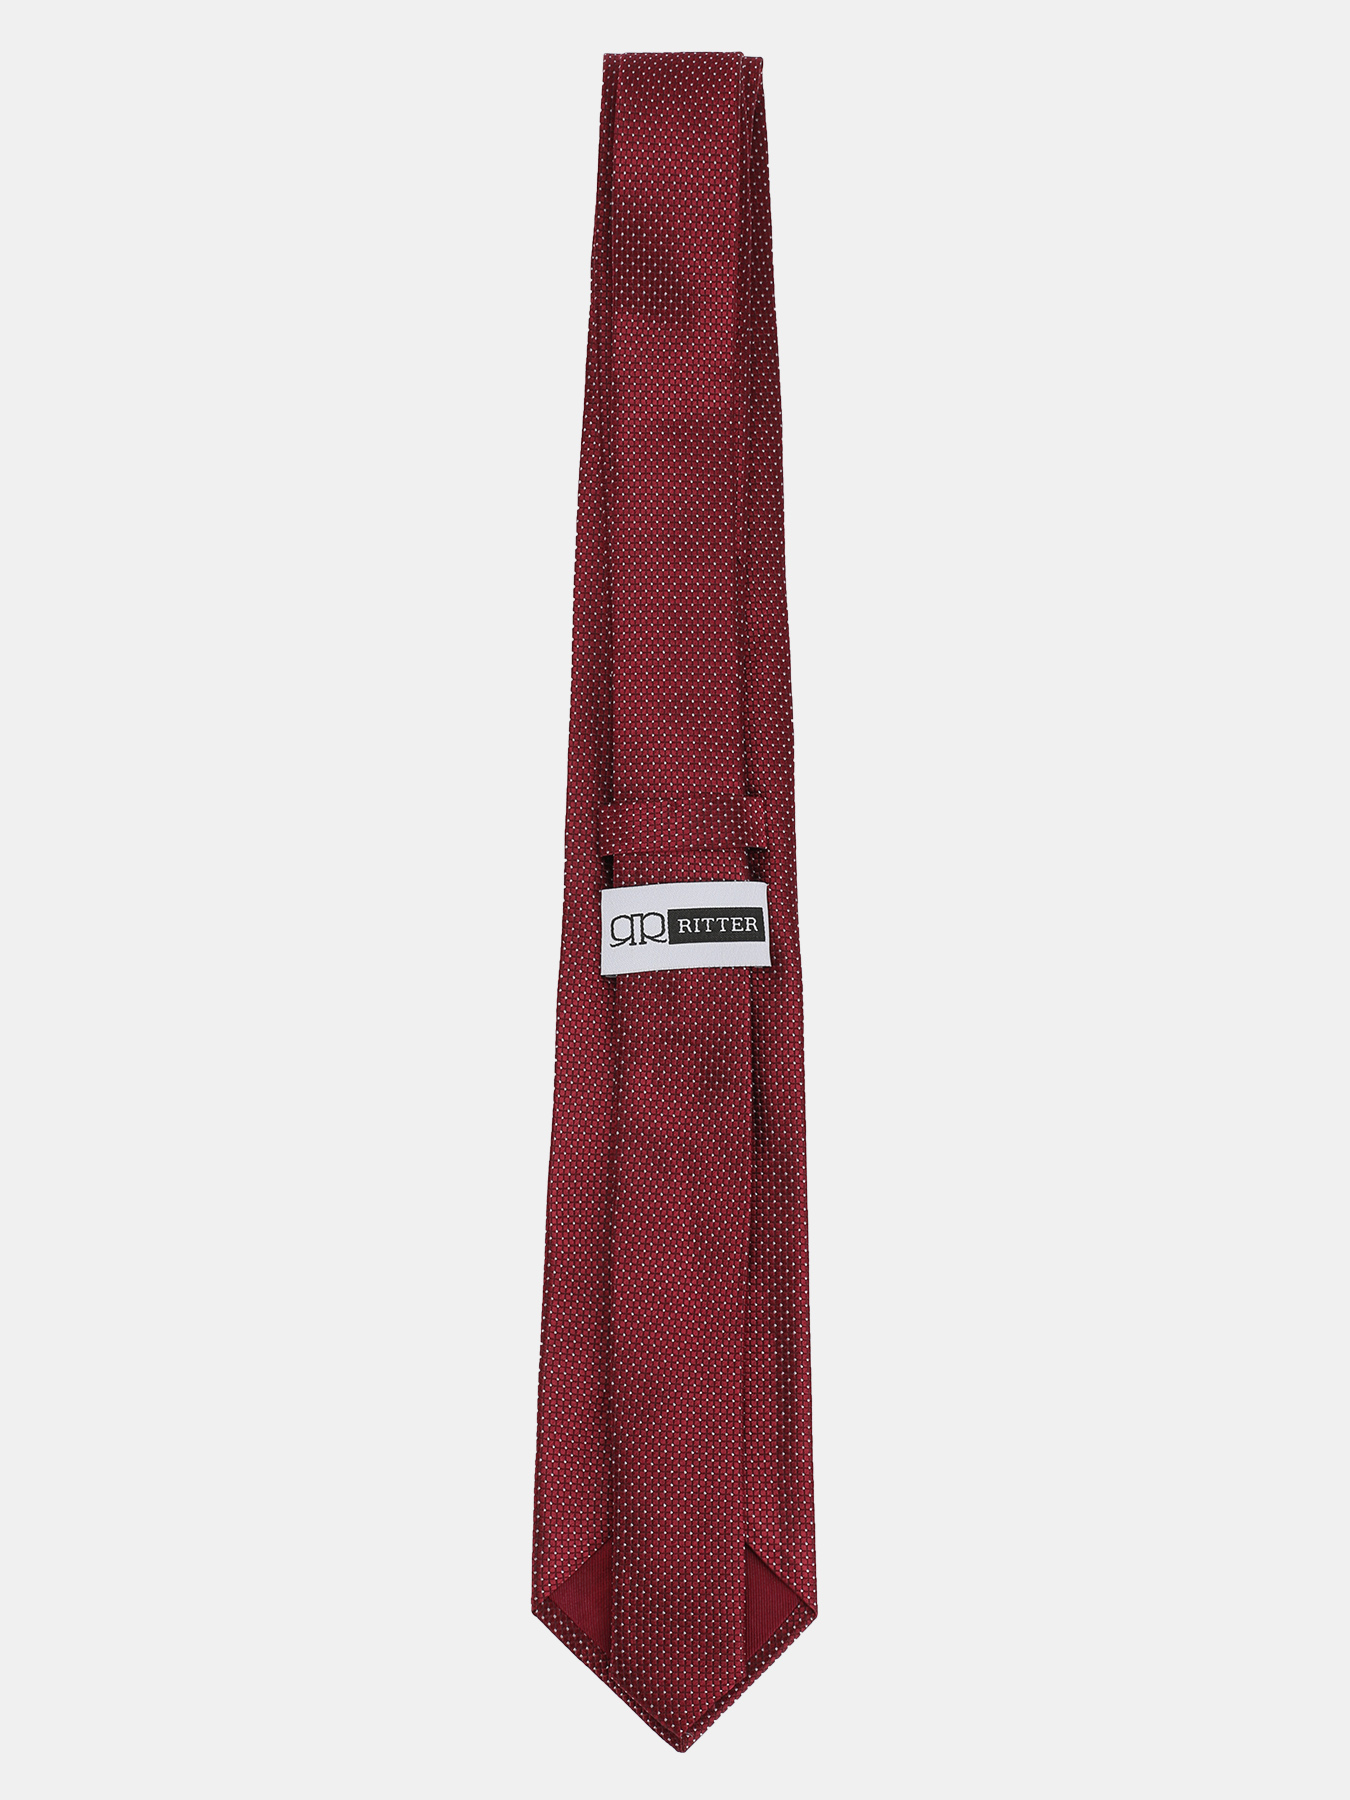 Ritter Шелковый галстук с узорами 323009-185 Фото 2